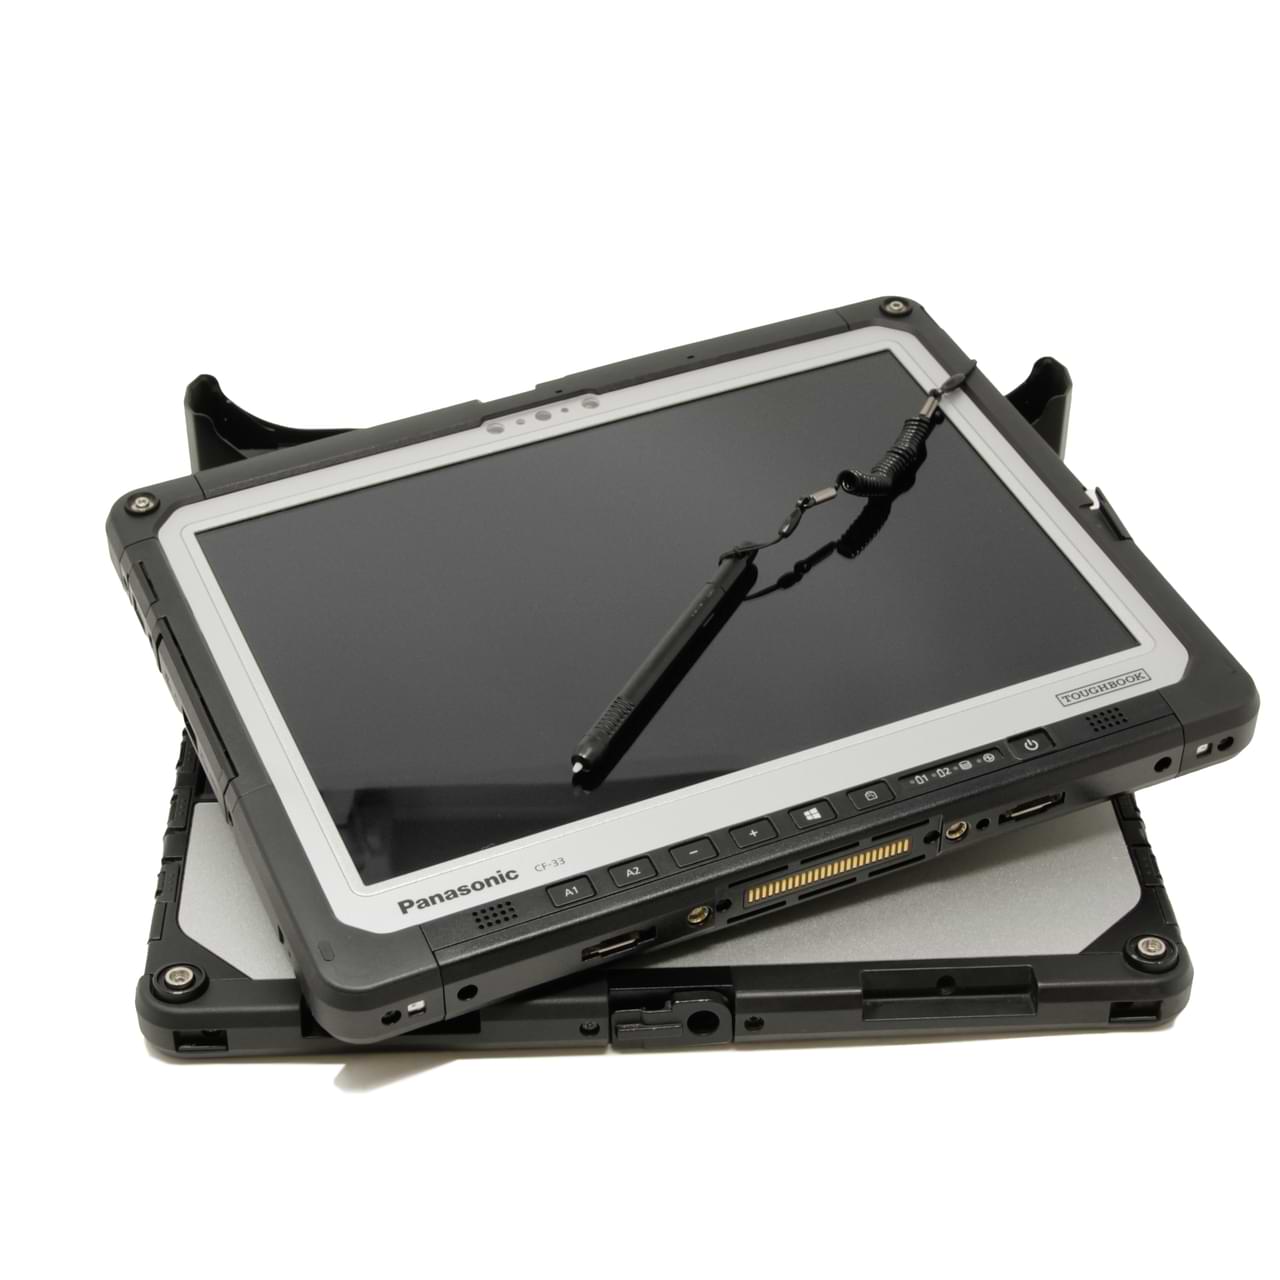 The Panasonic Toughbook cf-33 has a 1000 nit daylight readable screen.